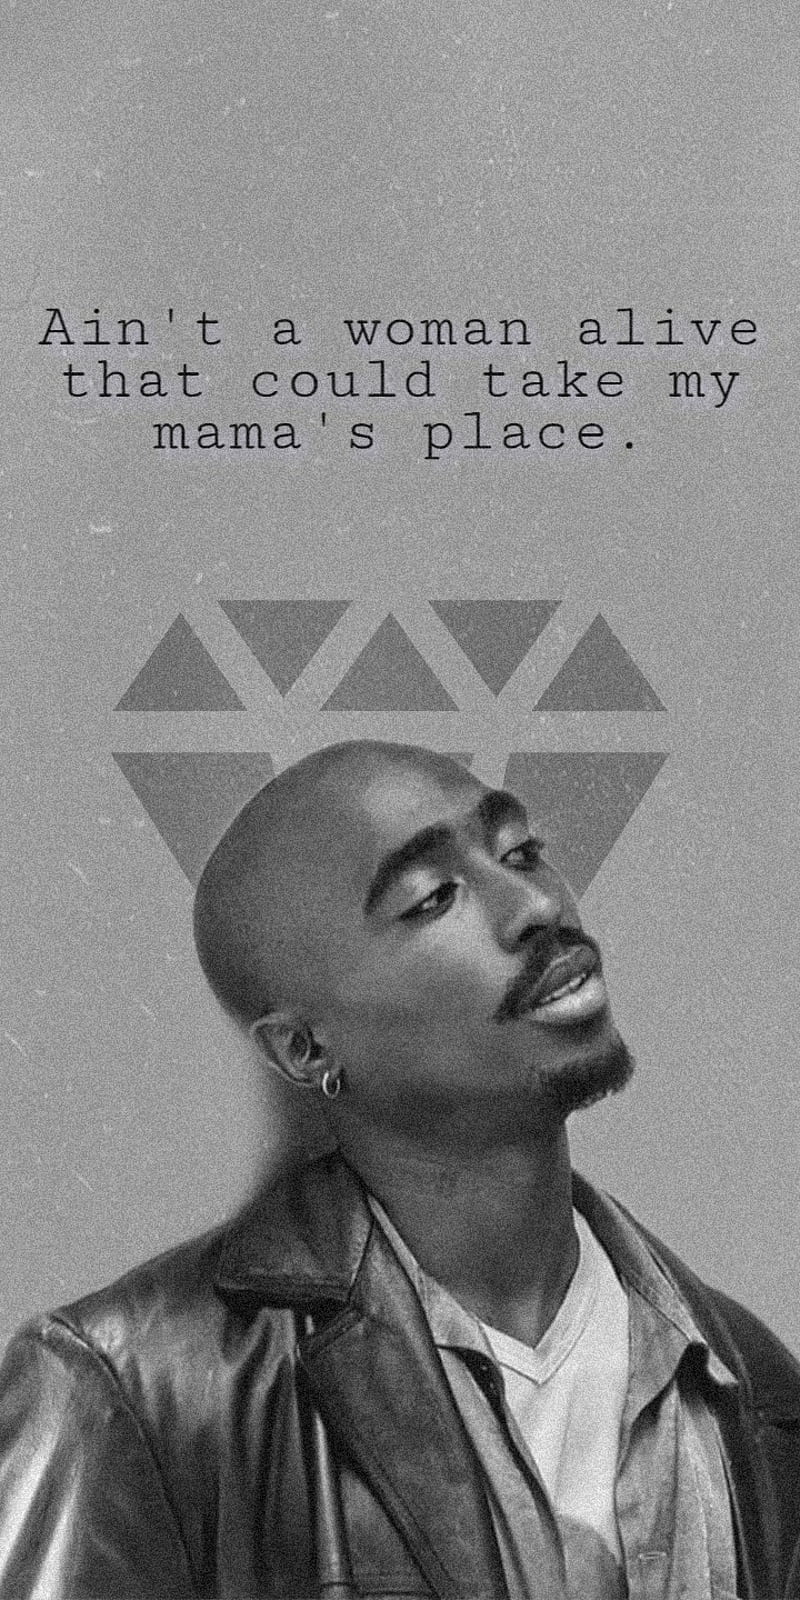 tupac quotes wallpaper hd